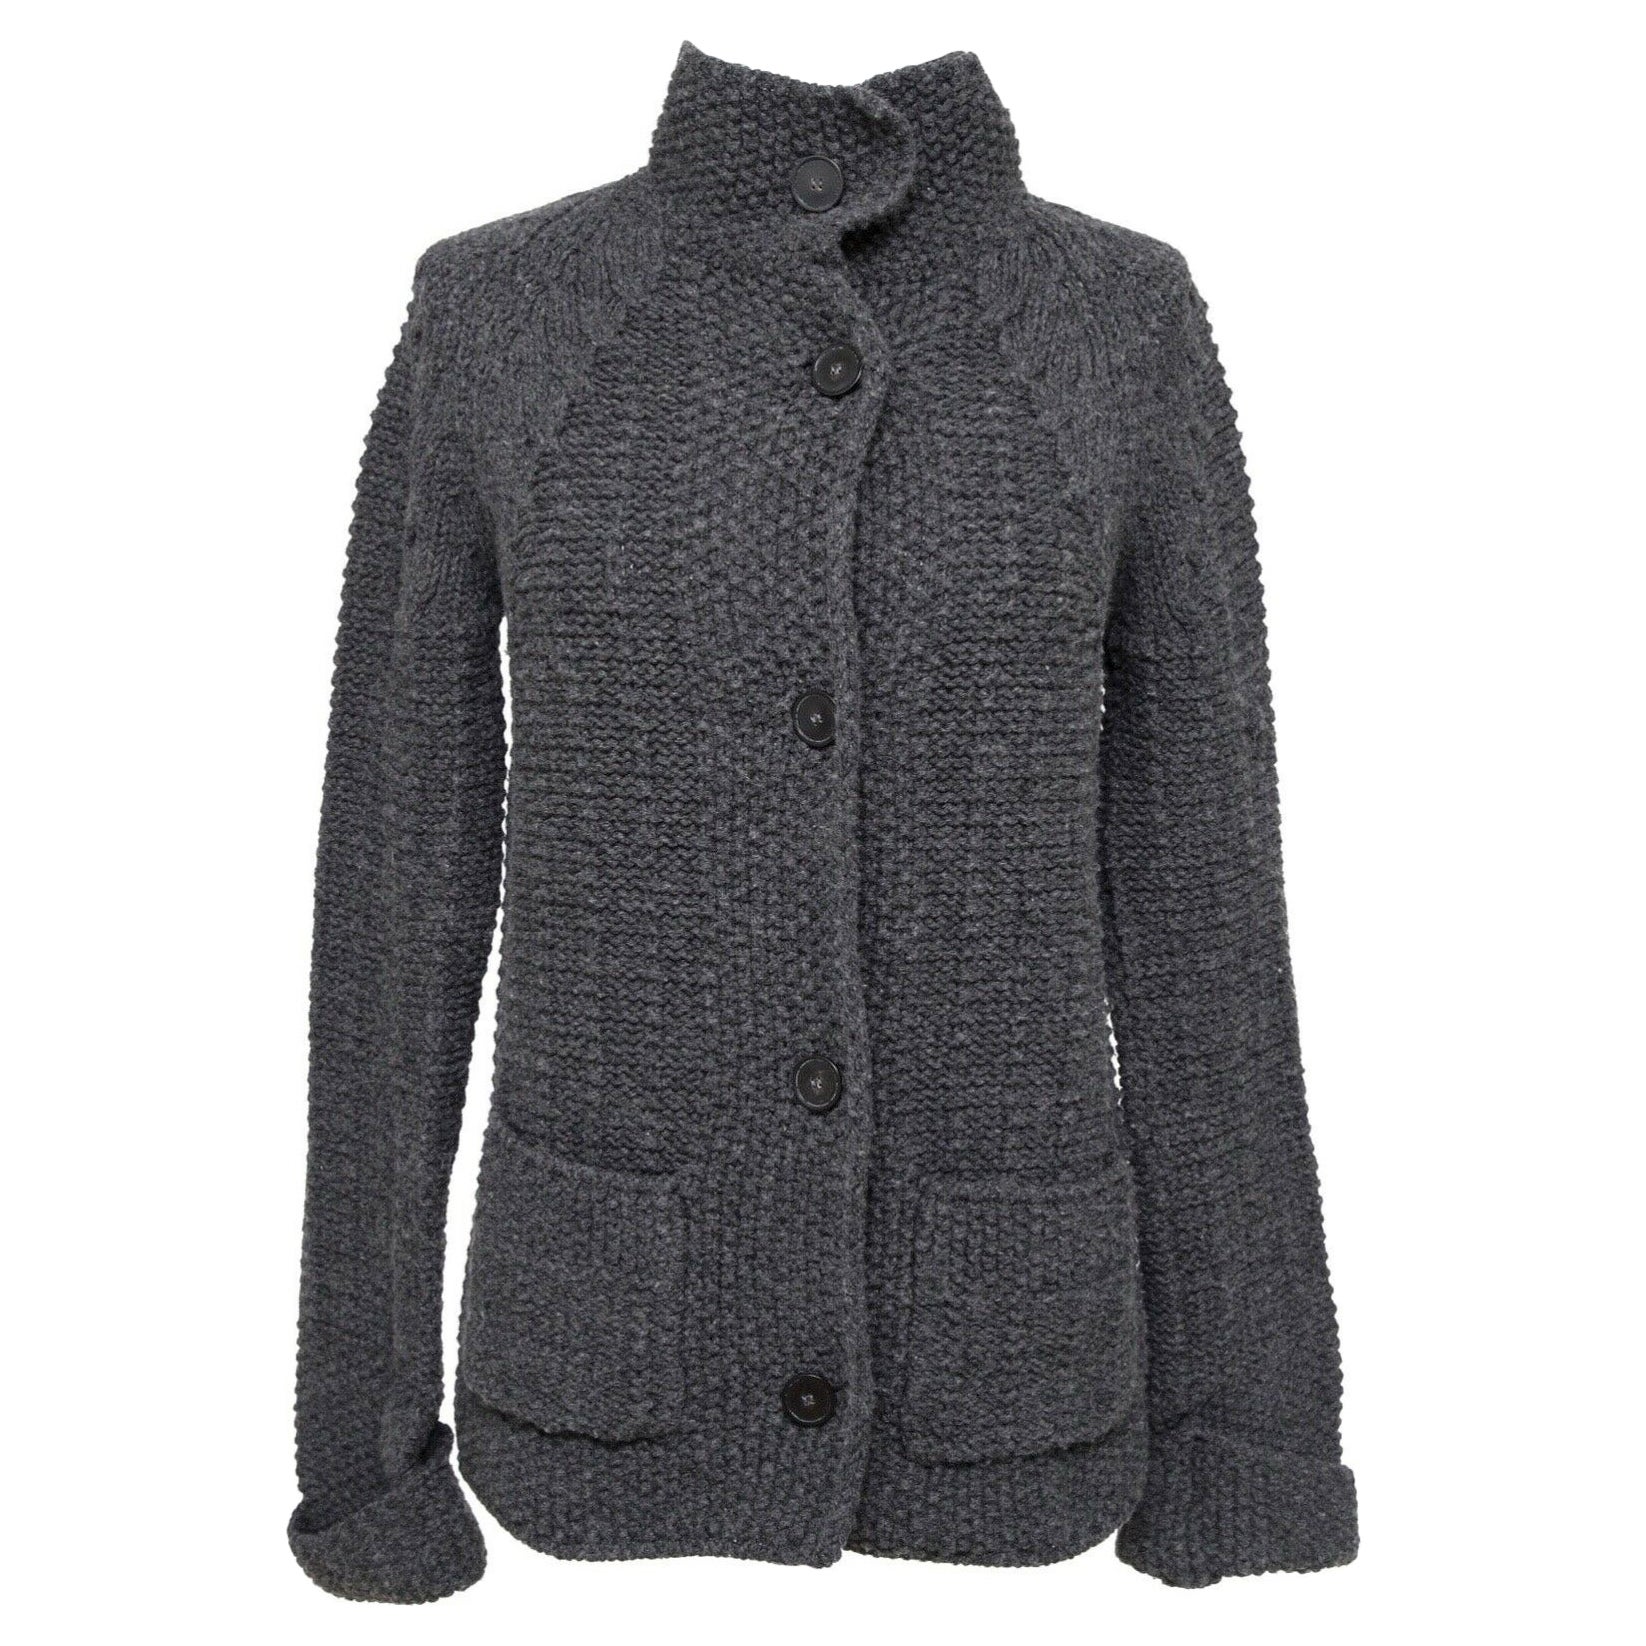 CHLOE Sweater Cardigan Knit Jacket CHARCOAL GREY Long Sleeve Sz XS 2011